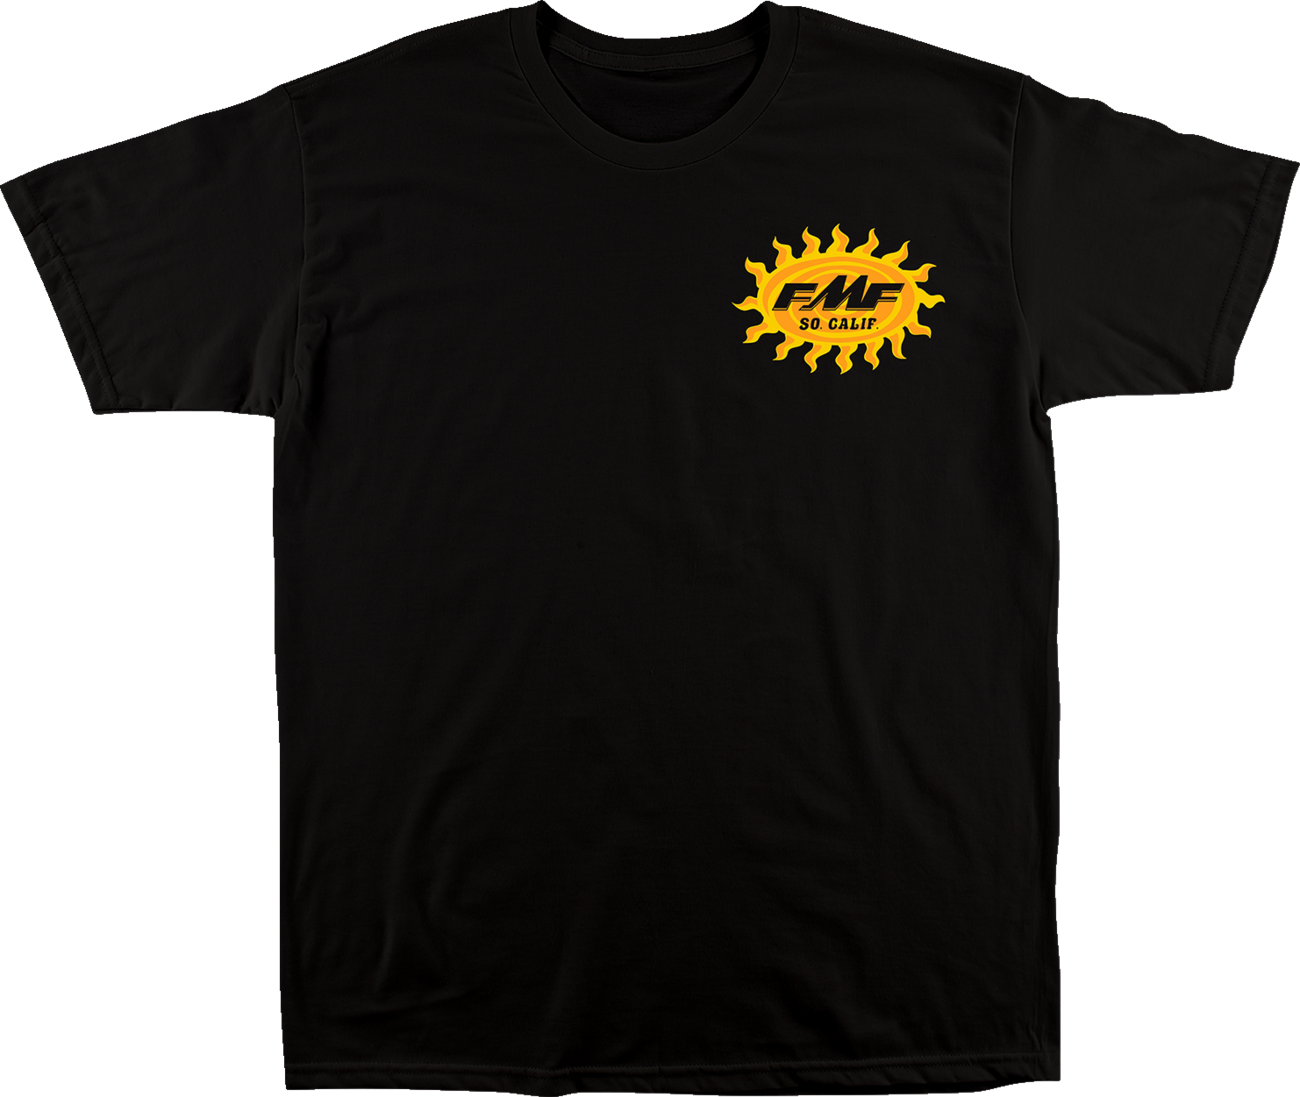 FMF Sunny T-Shirt - Black - 2XL SP22118907BK2X 3030-21880